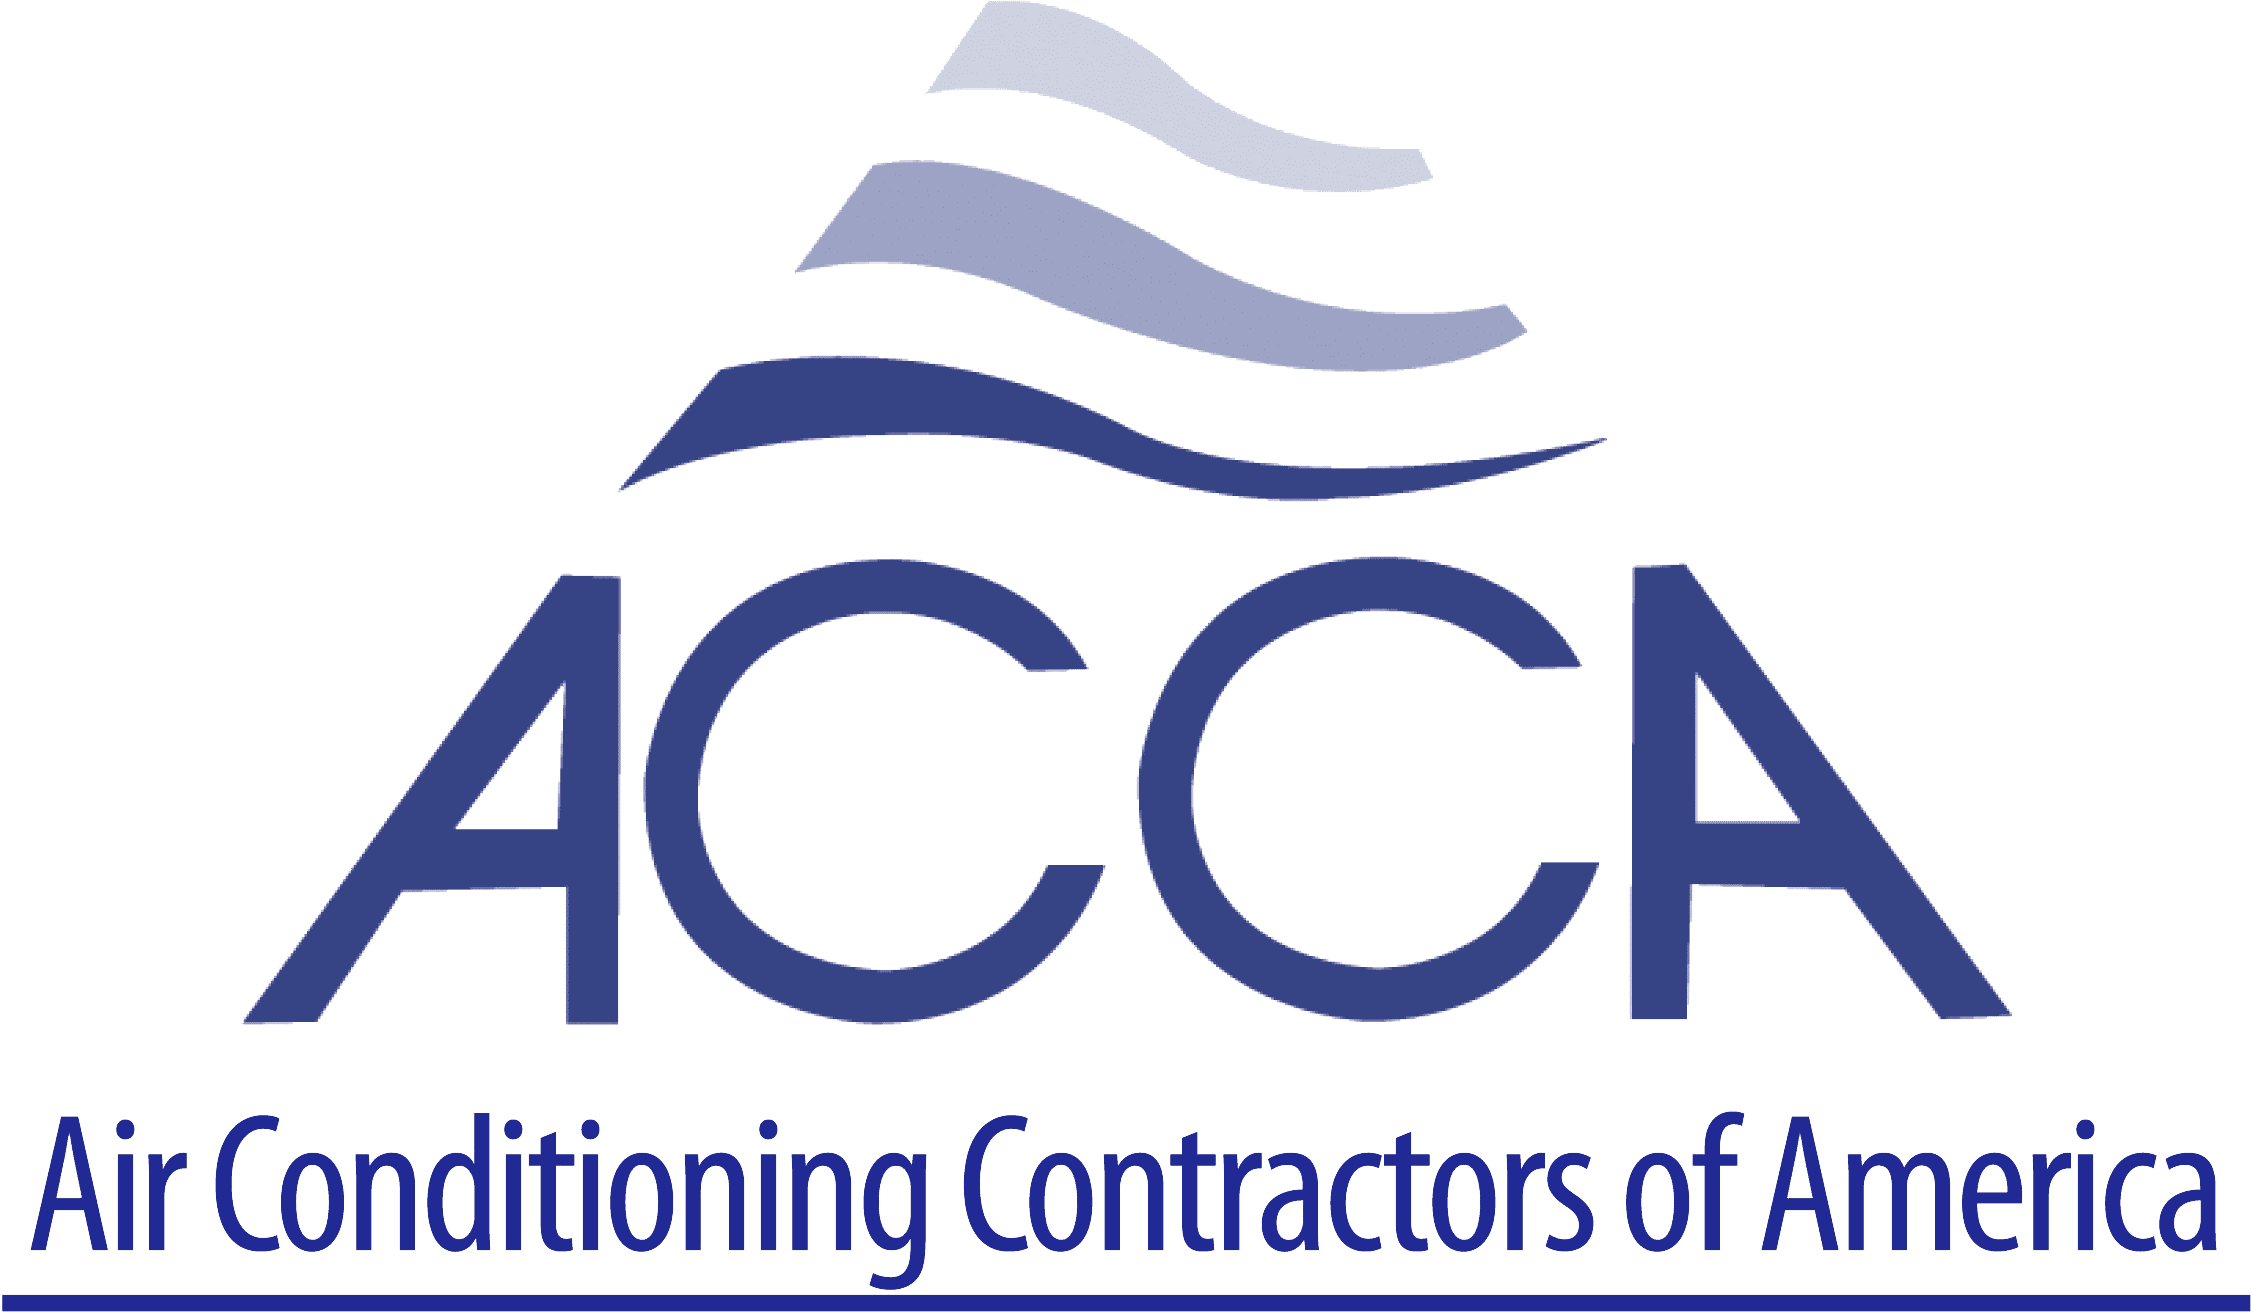 ACCA Logo